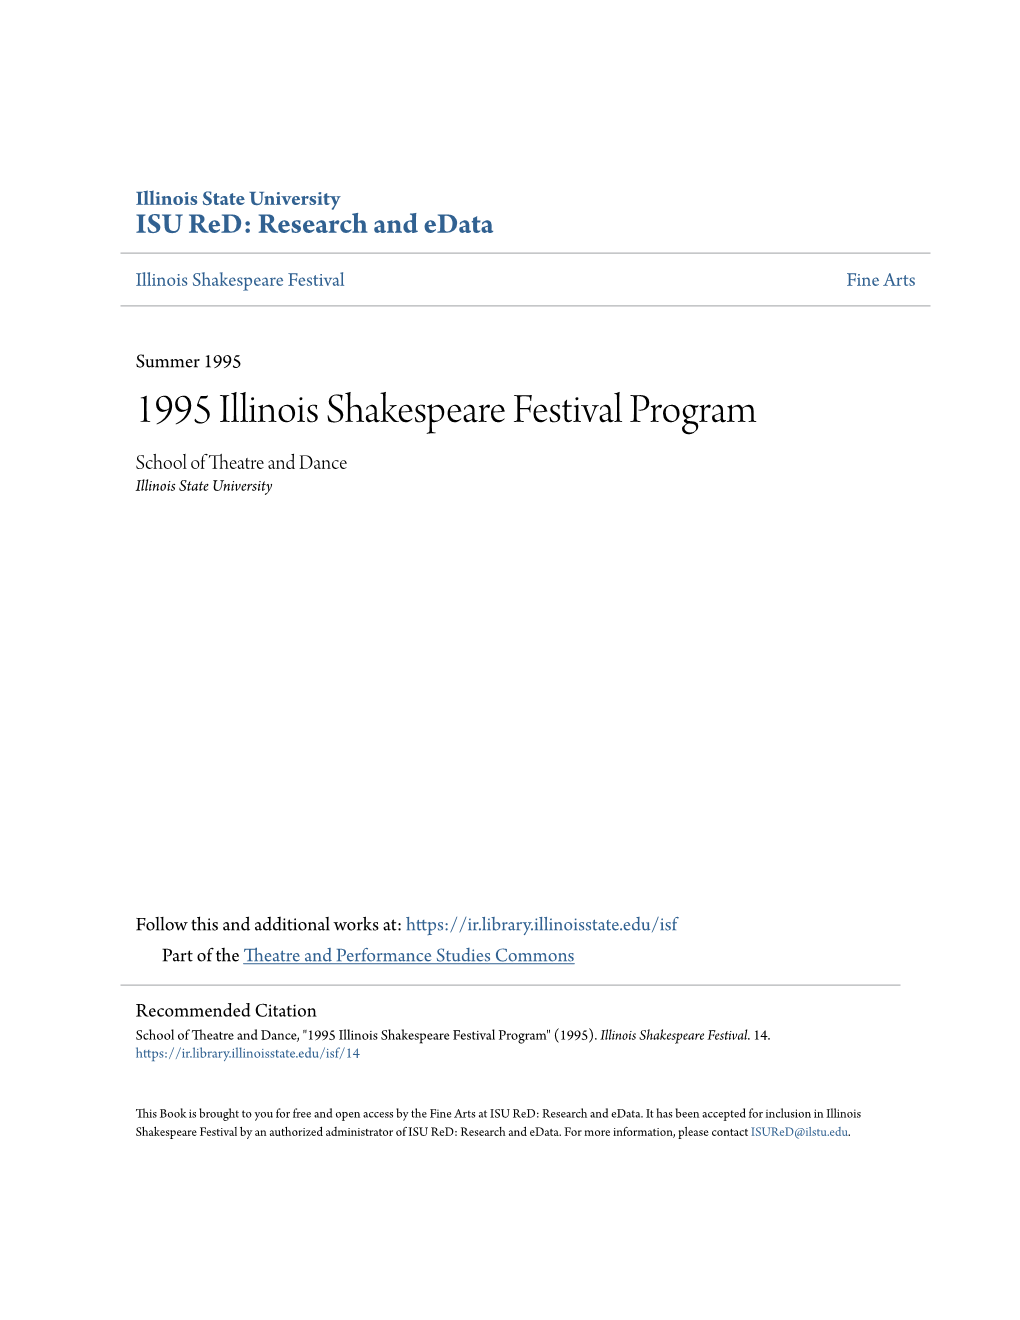 1995 Illinois Shakespeare Festival Program School of Theatre and Dance Illinois State University